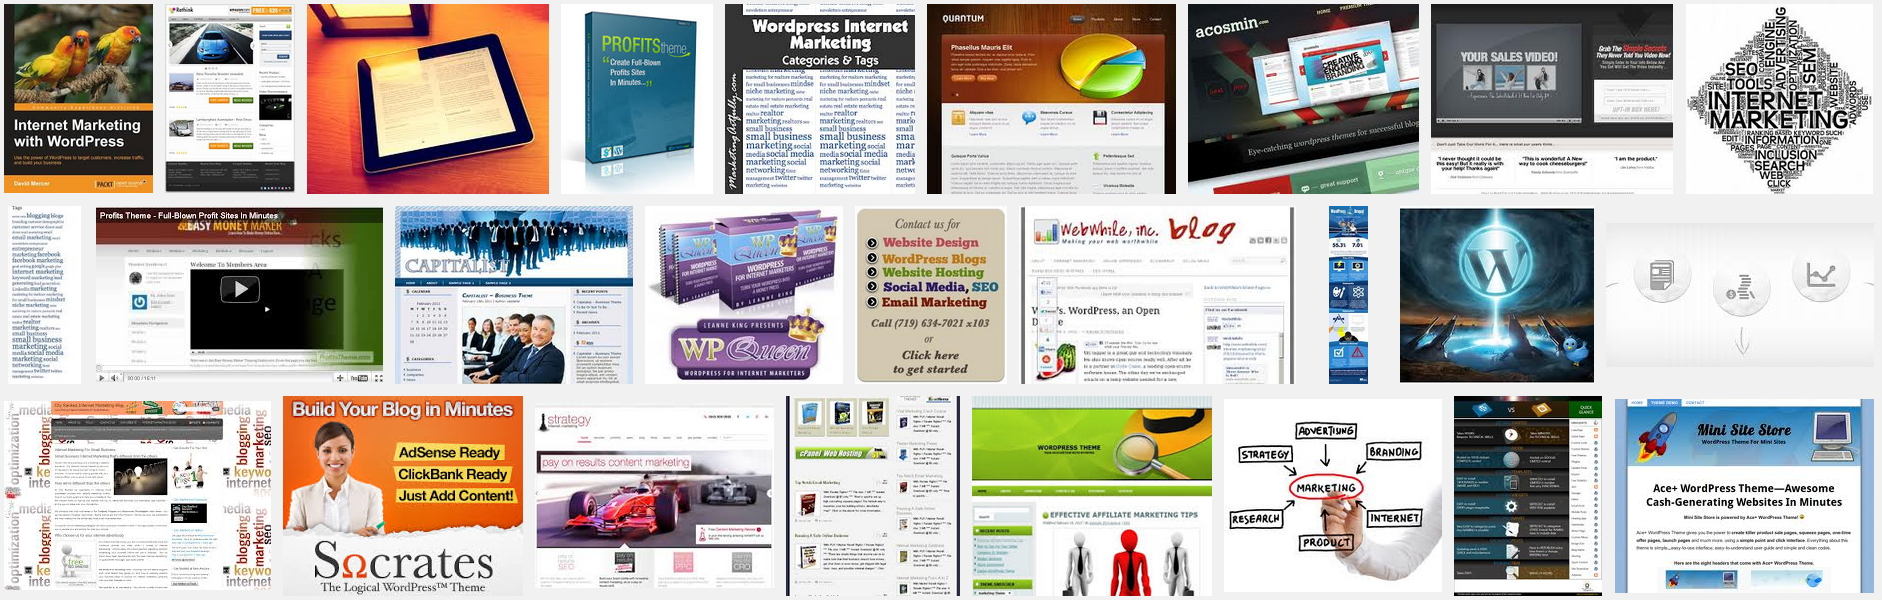 Internet Marketing with WordPress in 2014